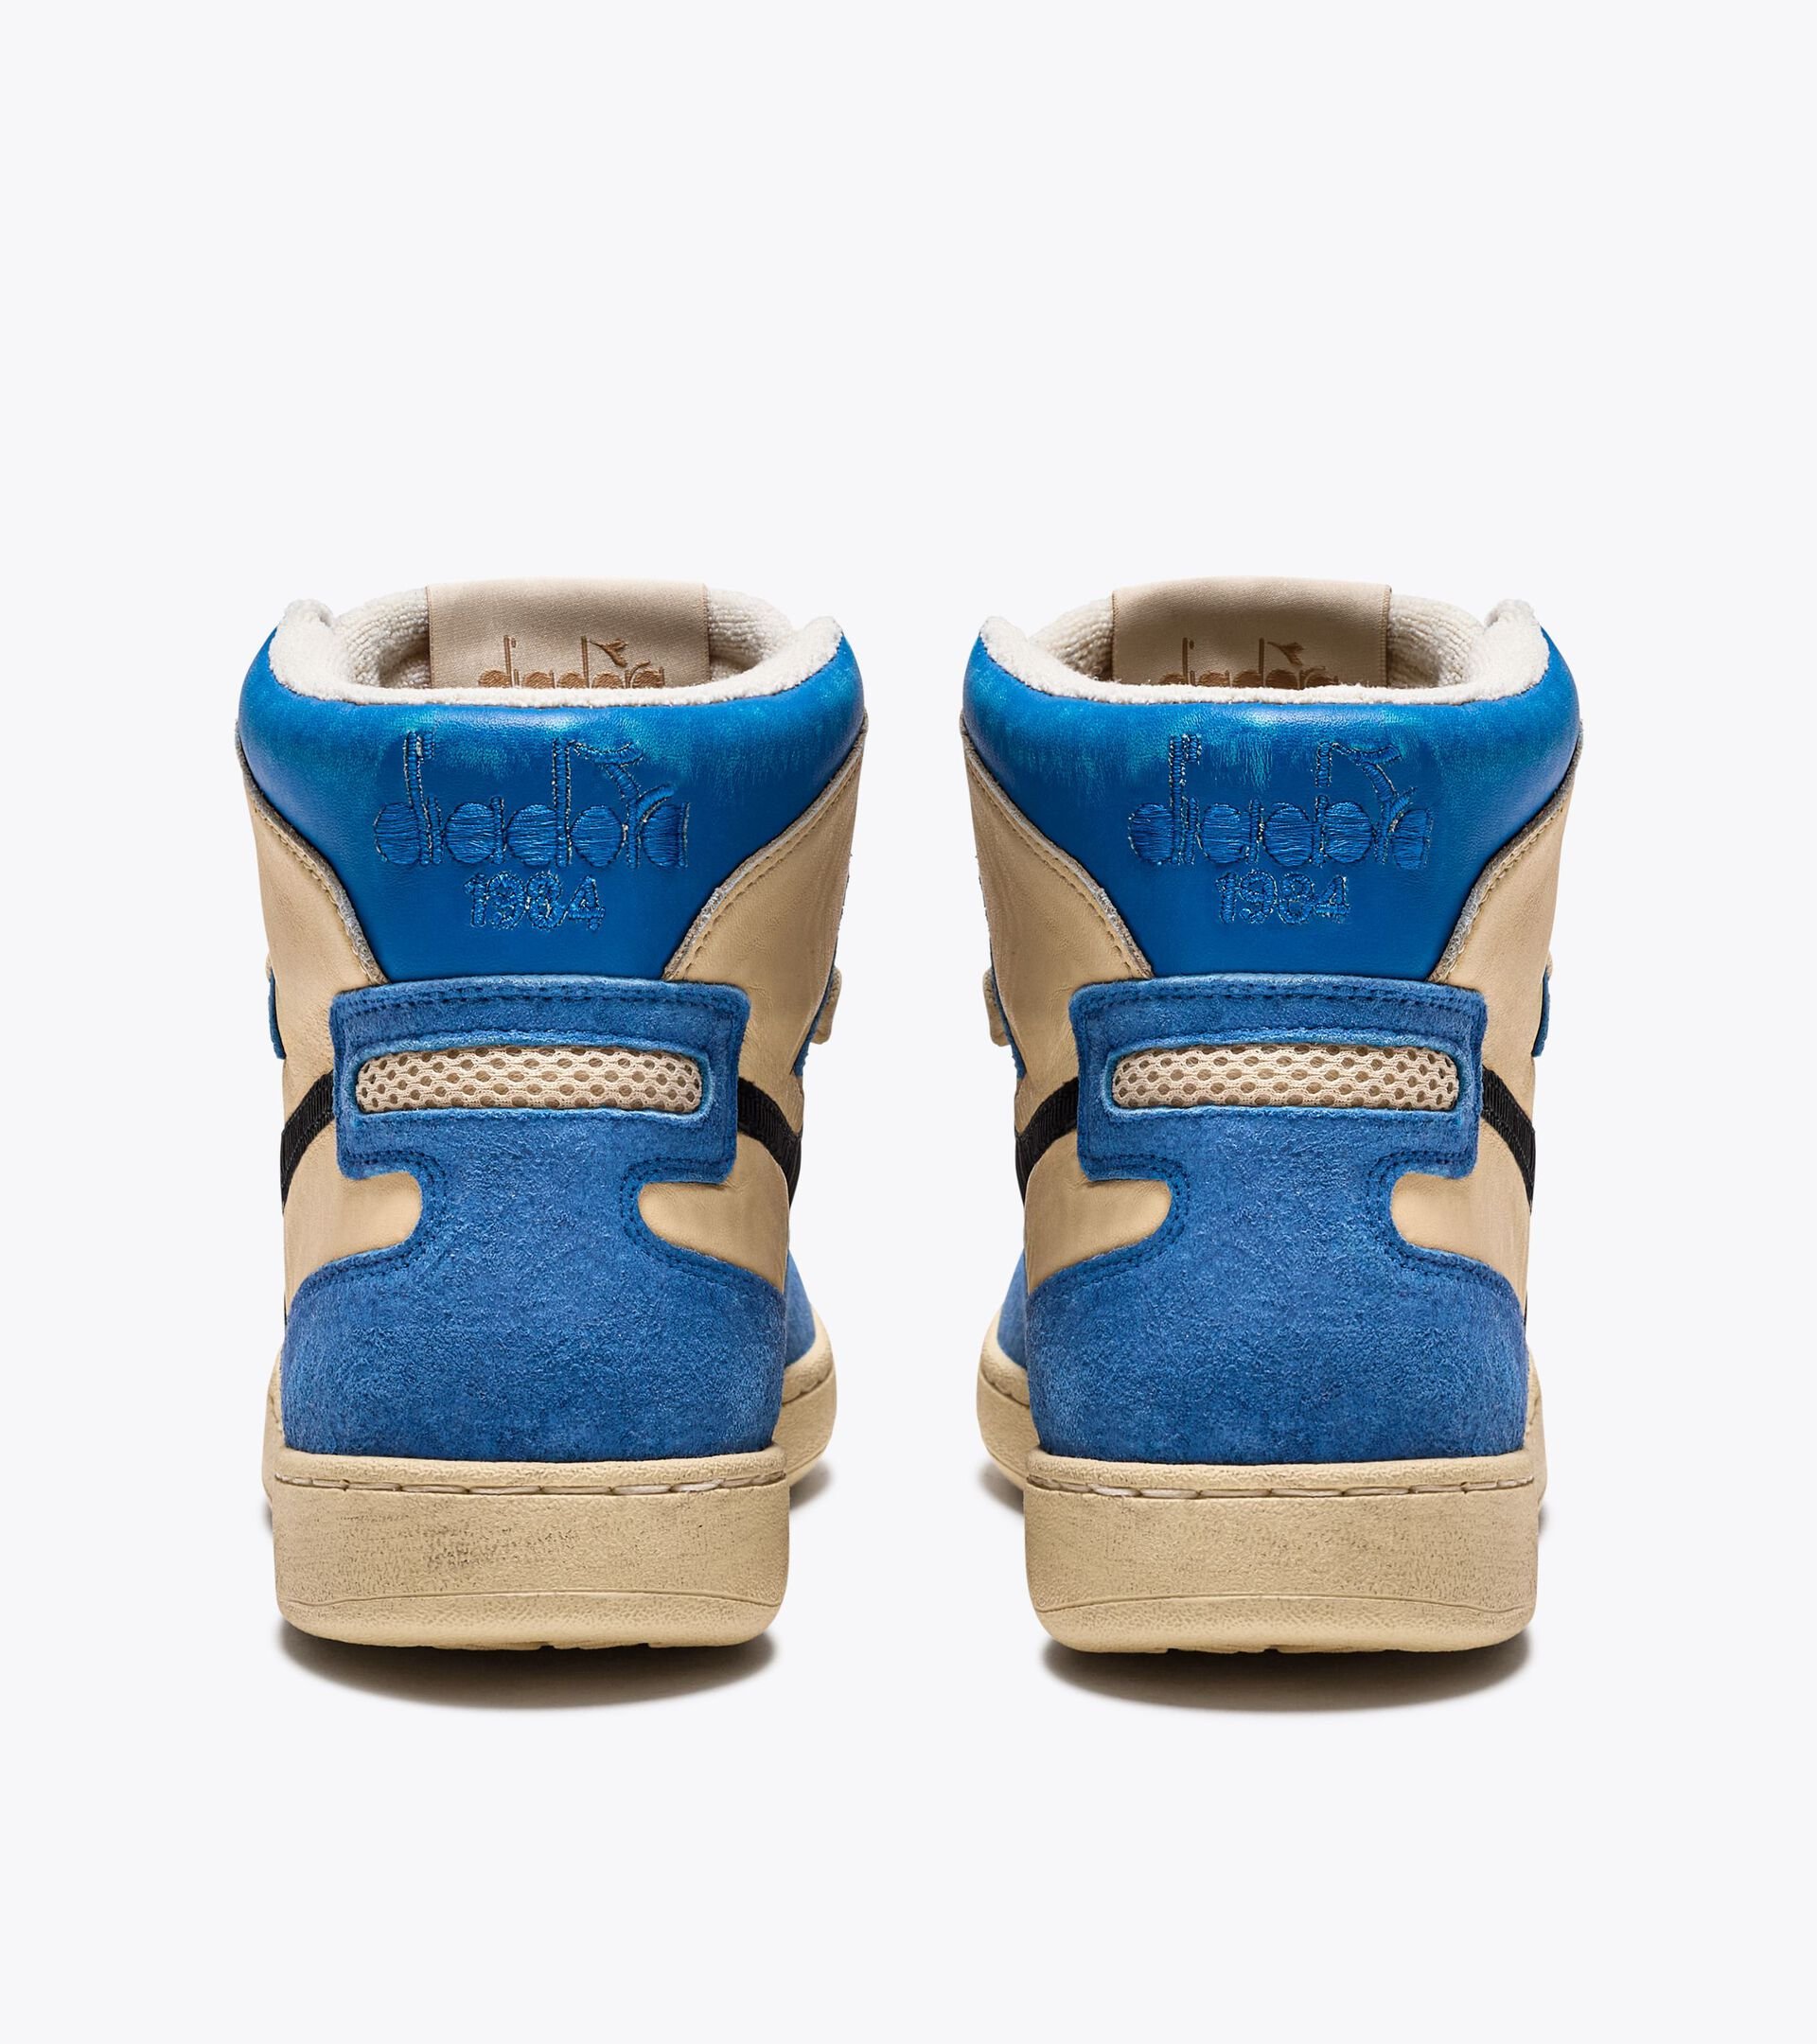 Heritage sneakers - Made in Italy - Gender Neutral MI BASKET PODIO ITA X DINO MENEGHIN SKY-BLUE MALIBU - Diadora